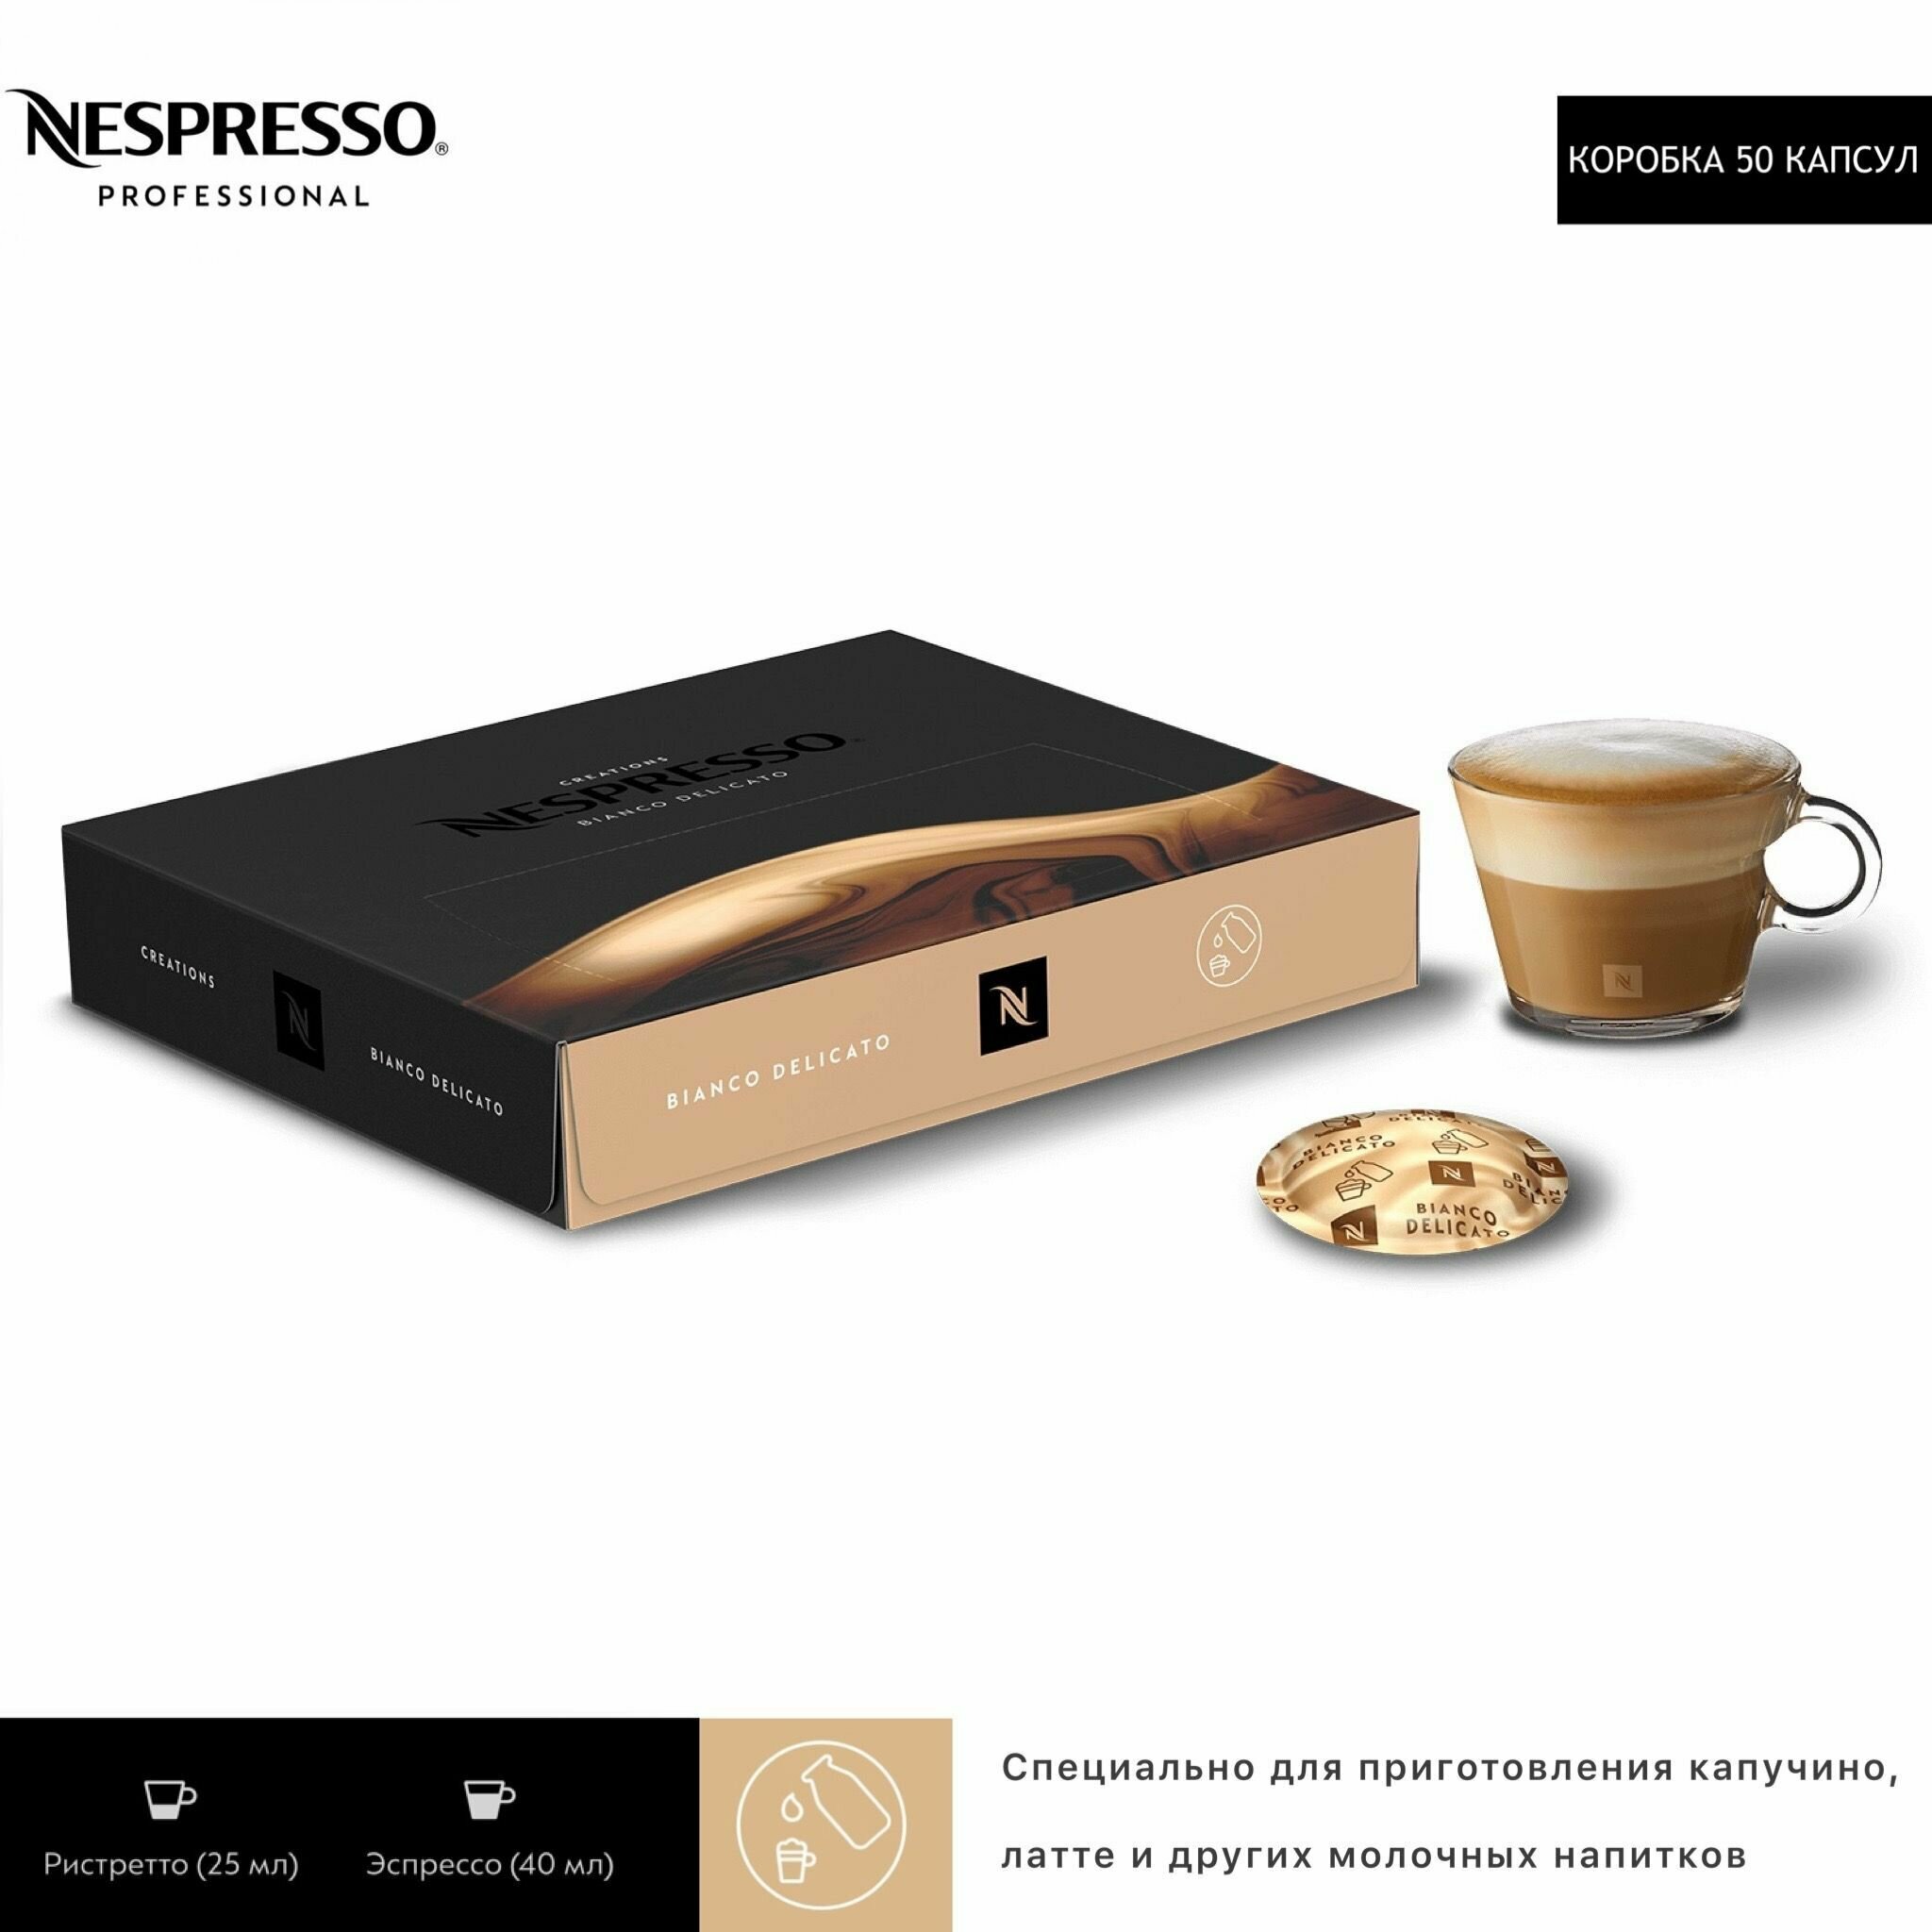 Кофе в капсулах Nespresso Professional Bianco Delicato